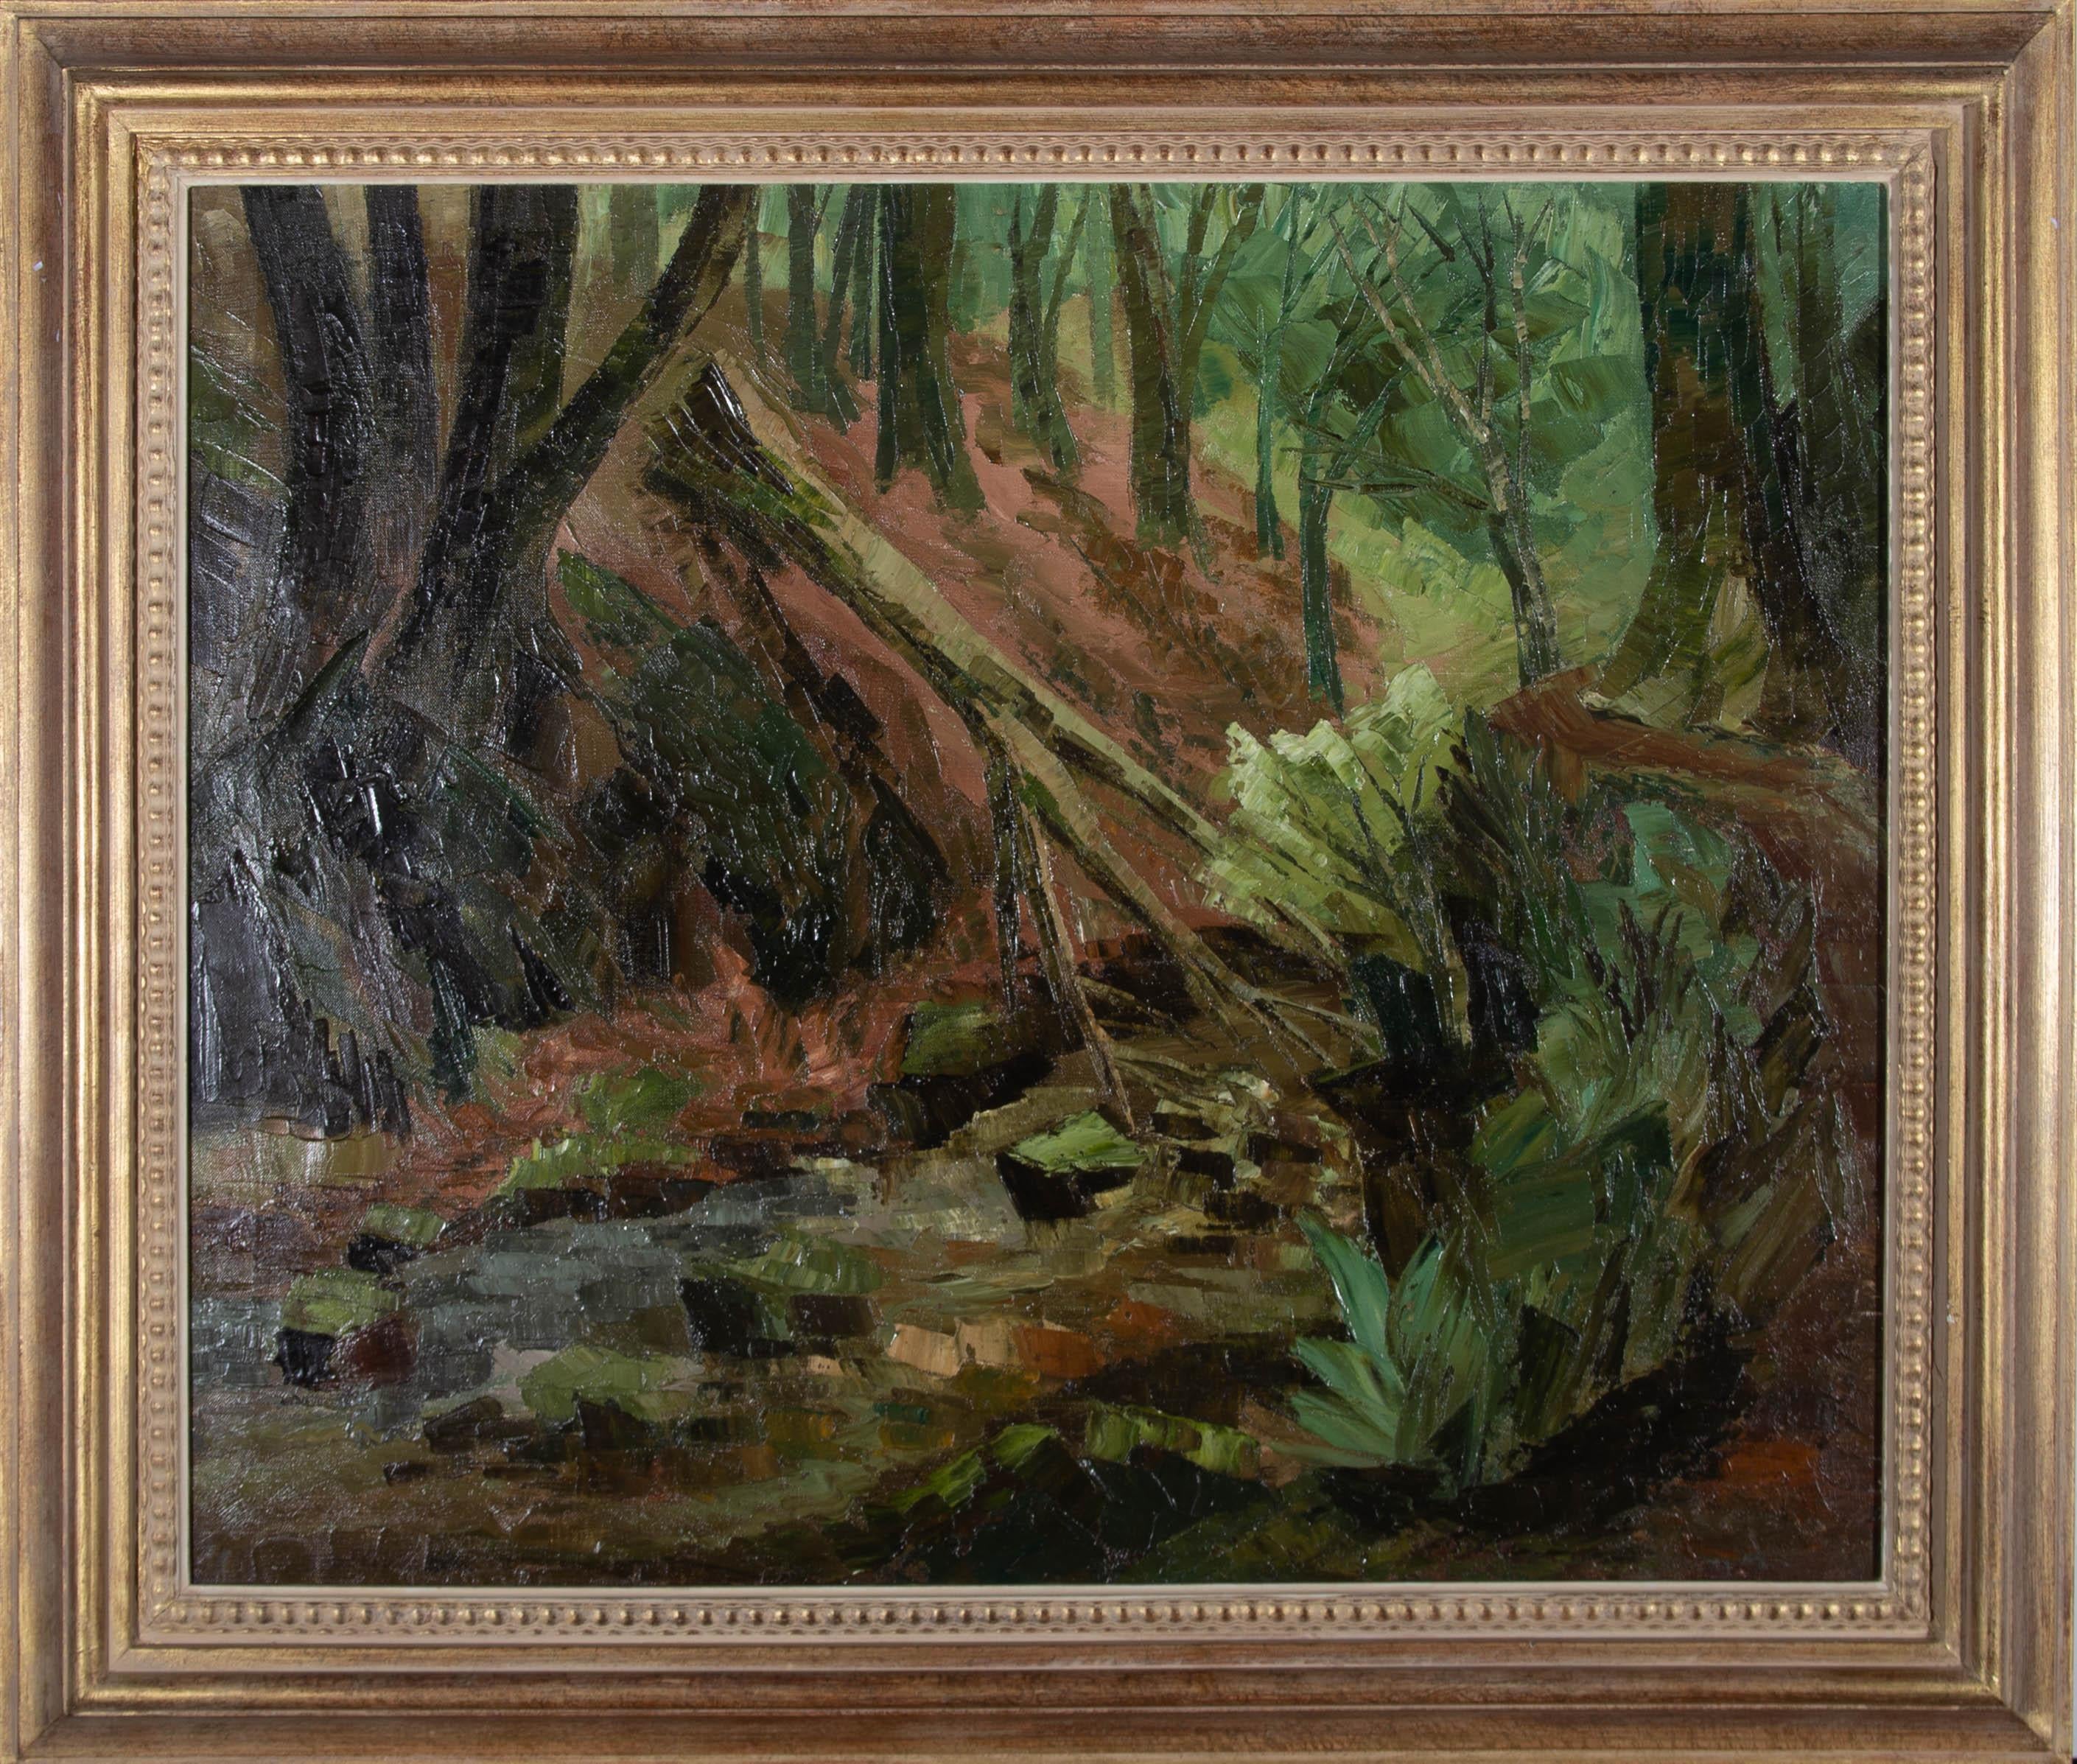 Unknown Landscape Painting - 20th Century Oil - Fallen Tree